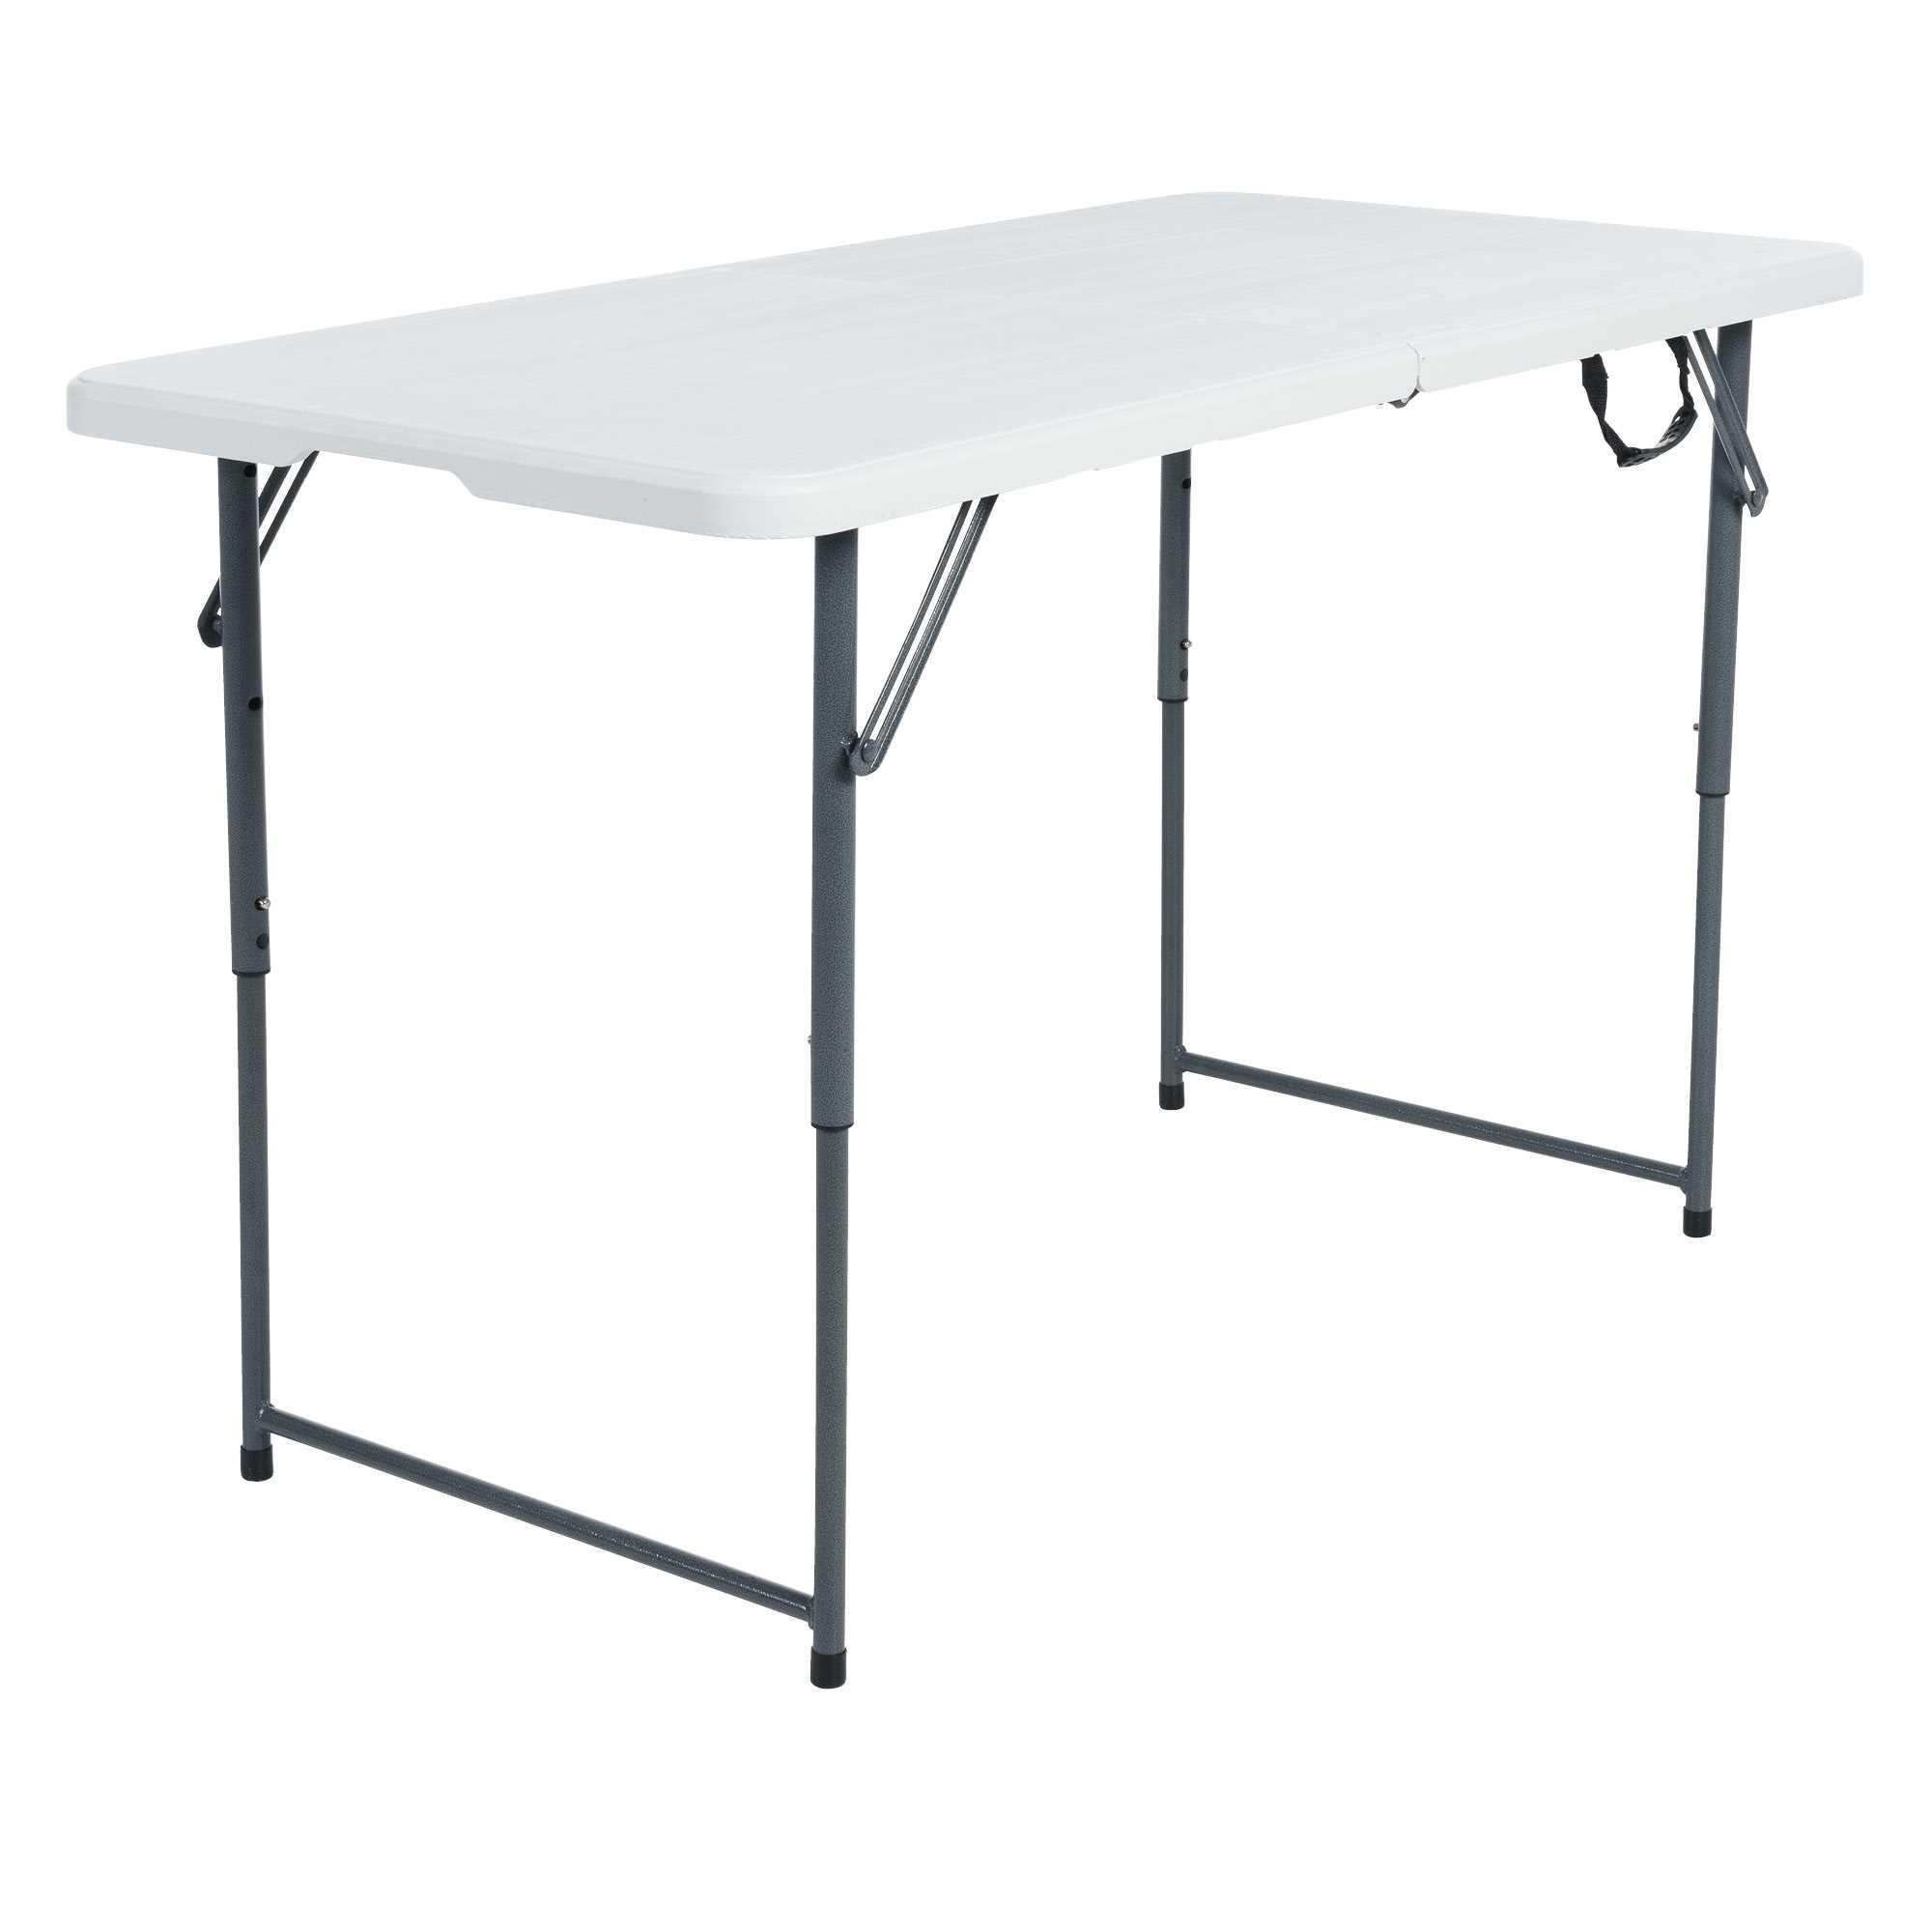 4-foot Adjustable Fold-In-Half Table